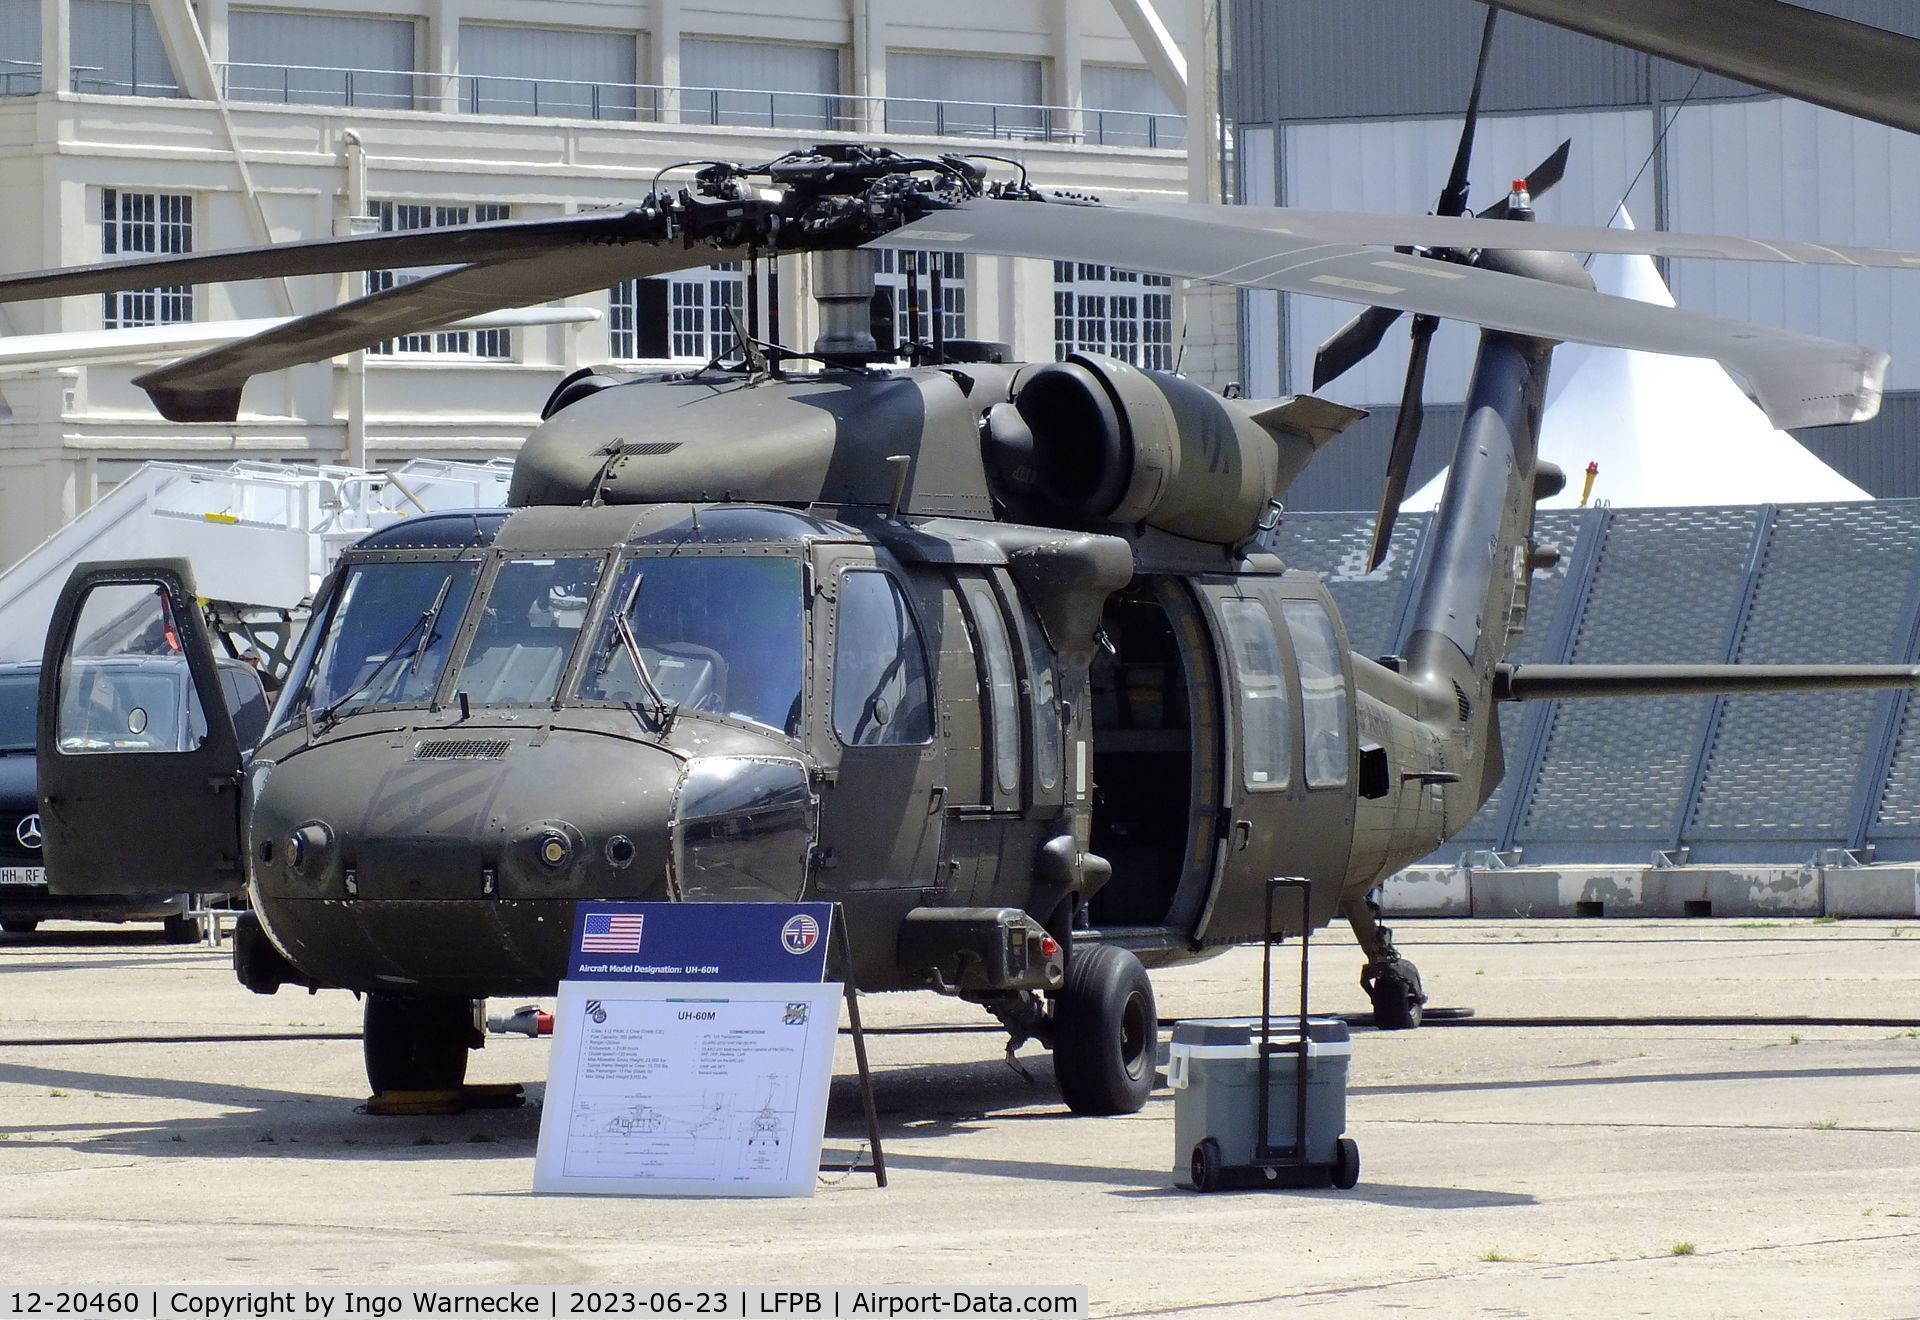 12-20460, 2012 Sikorsky UH-60M Black Hawk C/N 70.4039, Sikorsky UH-60M Black Hawk of the US Army at the Aerosalon 2023, Paris